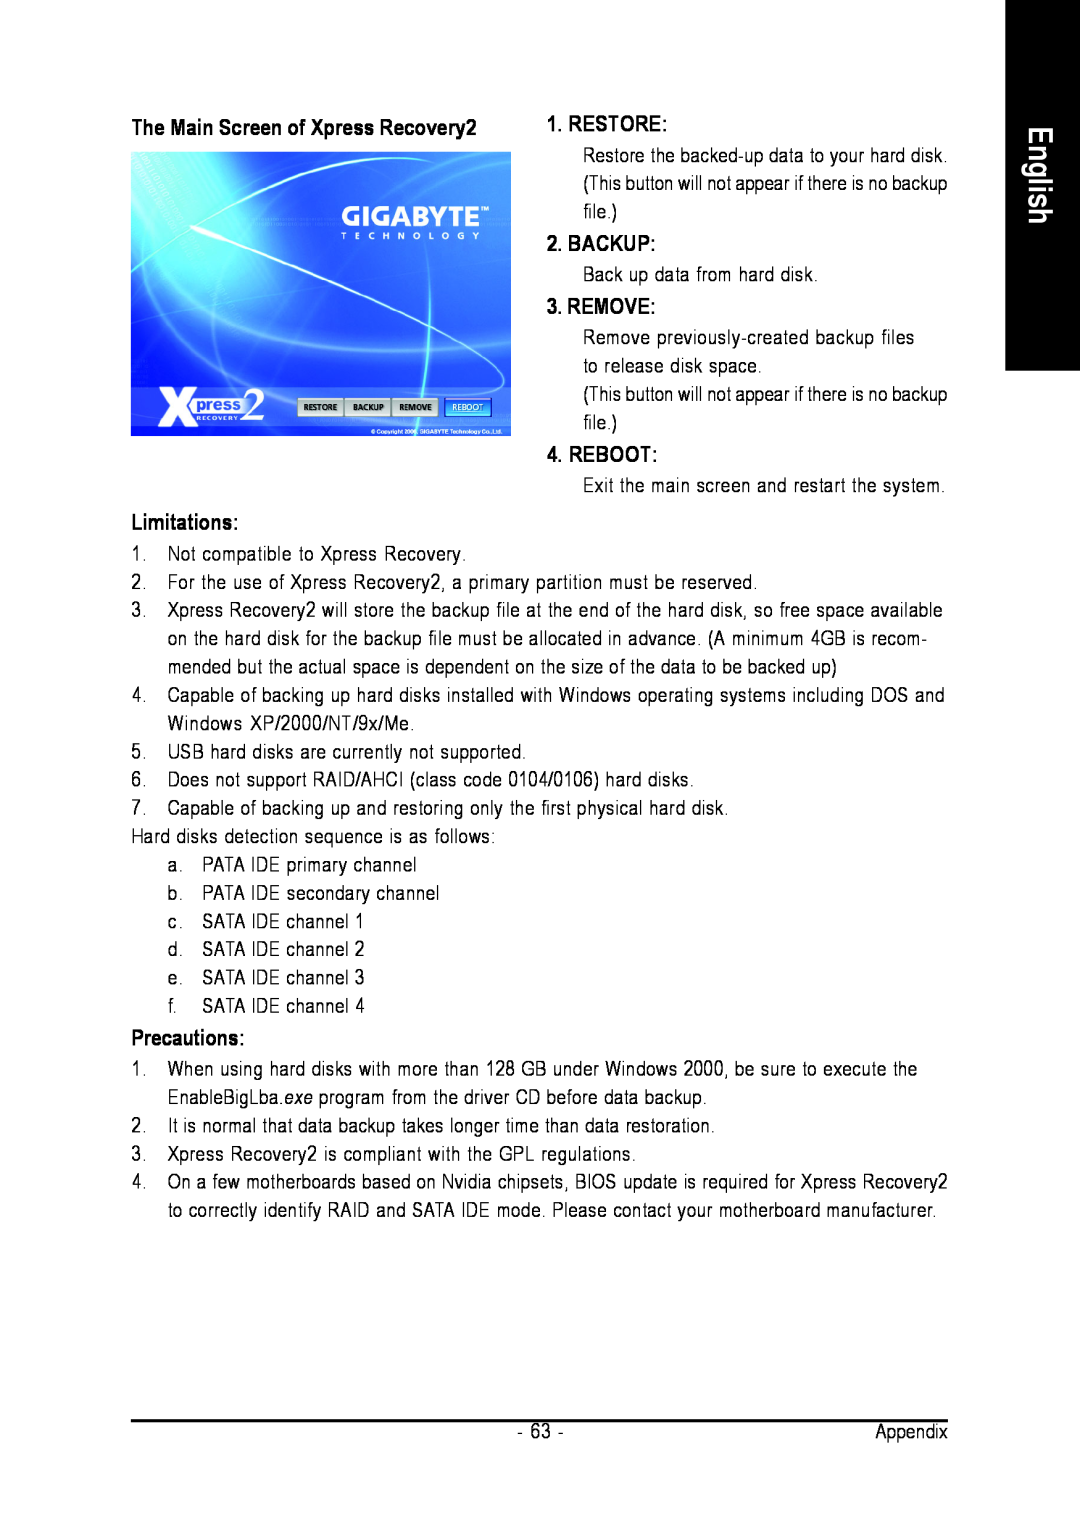 Intel GA-N650SLI-DS4 user manual English, Restore, Backup, Remove, Reboot, Limitations, Precautions 